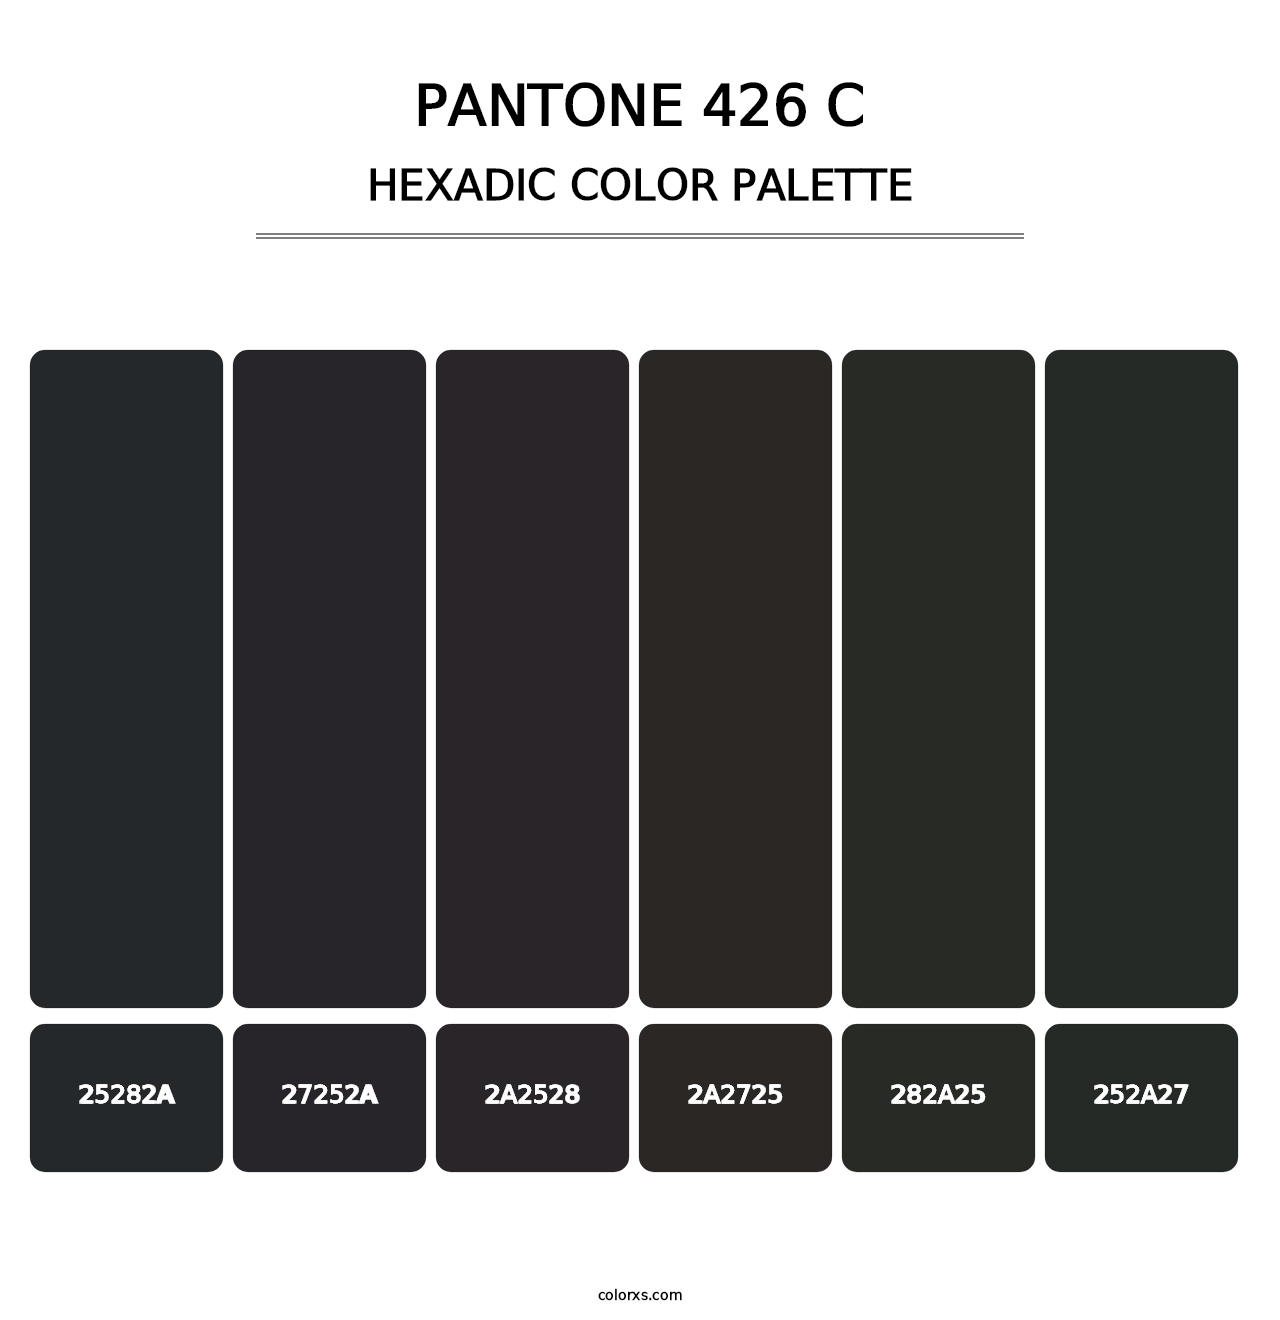 PANTONE 426 C - Hexadic Color Palette